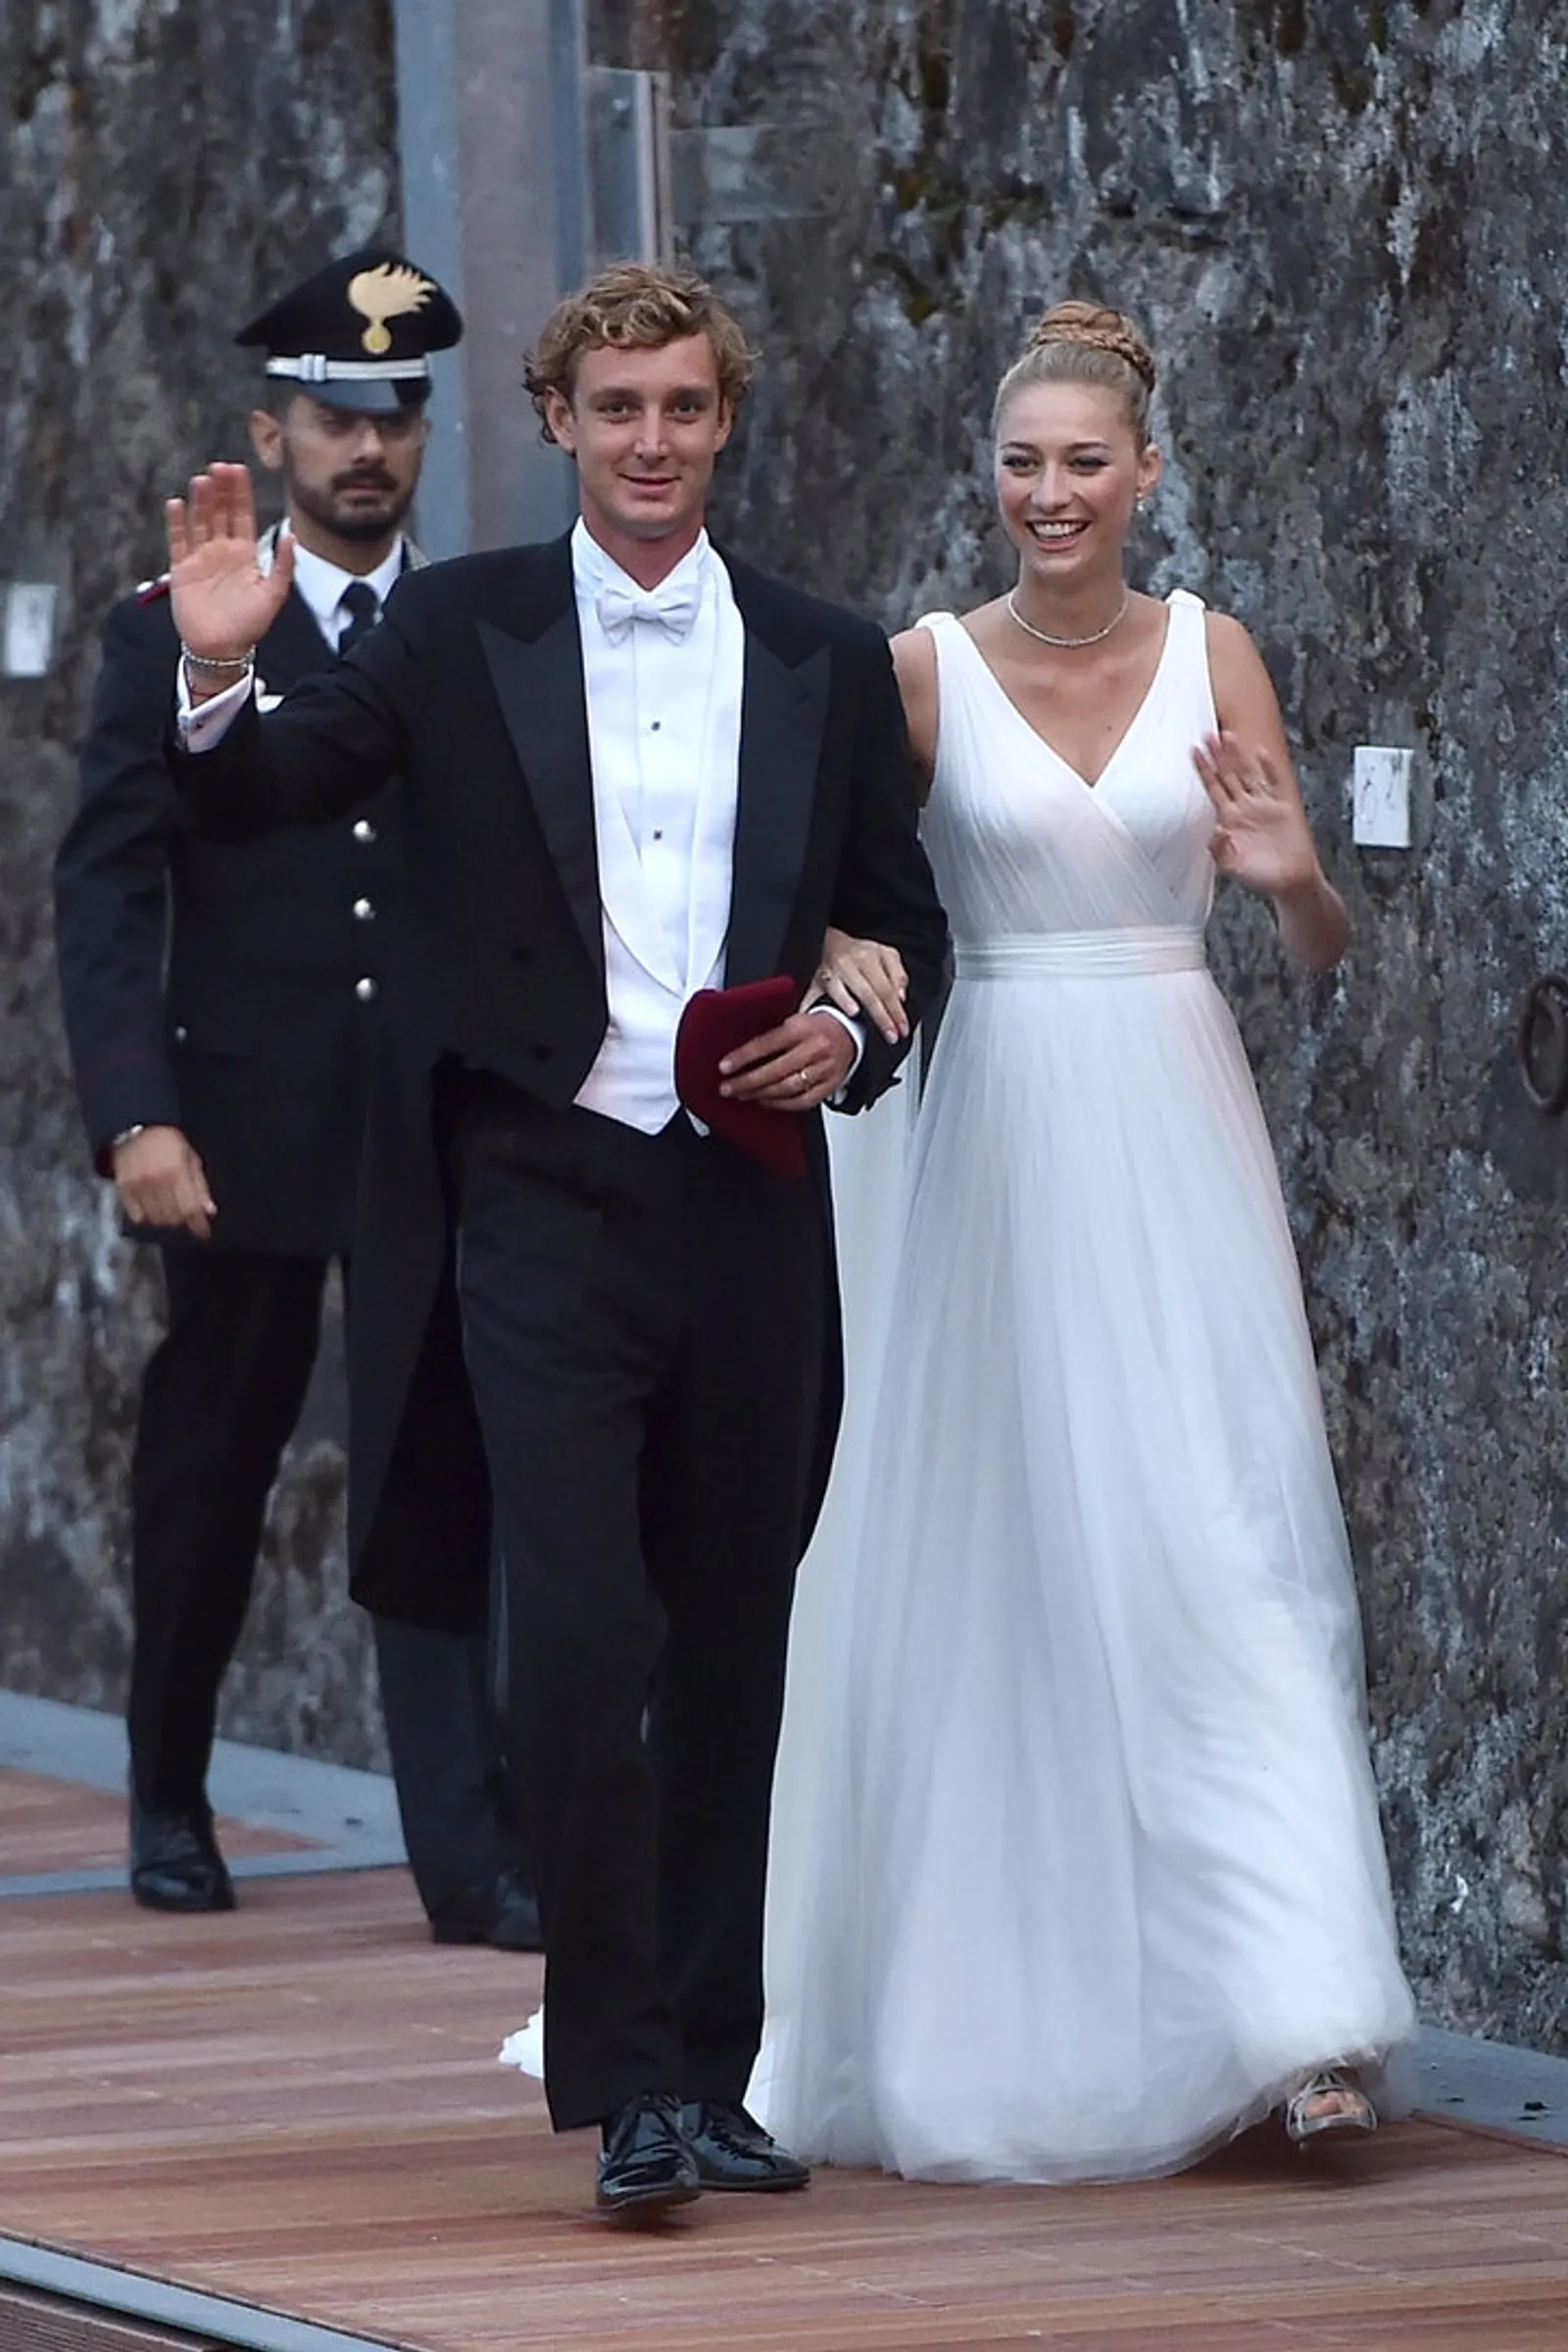 Glamor & Klasik, Ini Inspirasi Gaun Pernikahan Ala Royal Wedding